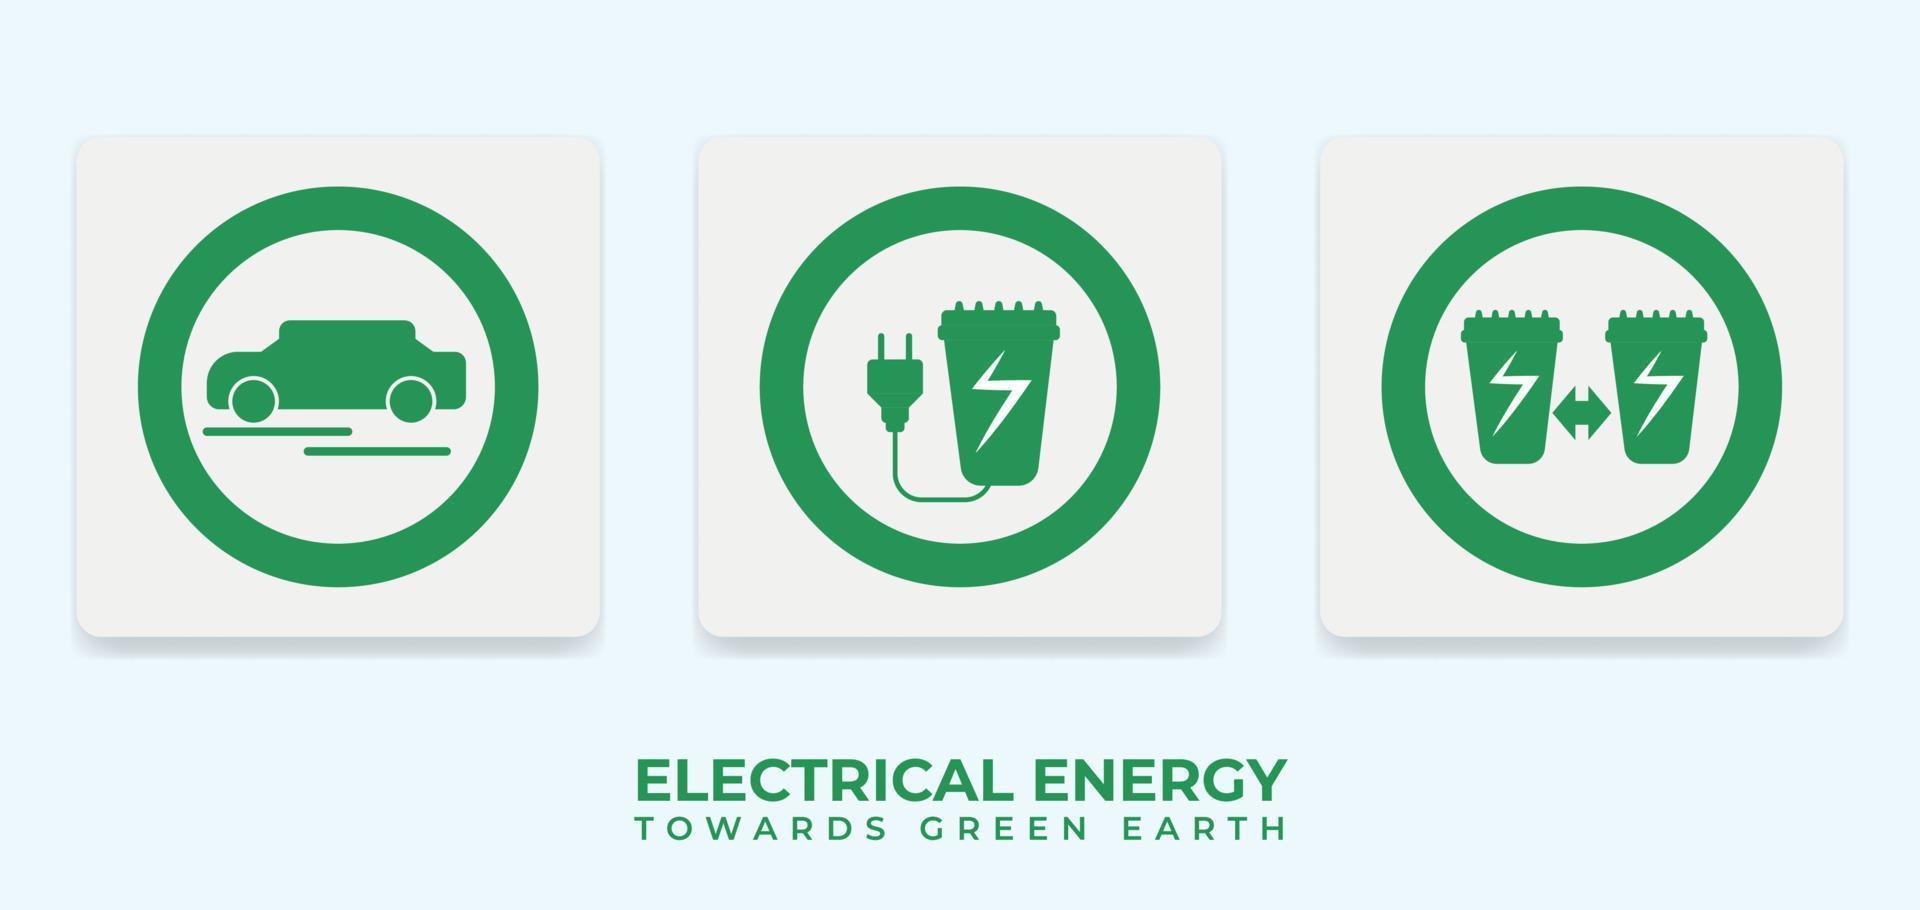 elektrisk energi laddning instruktioner logotyp vektor